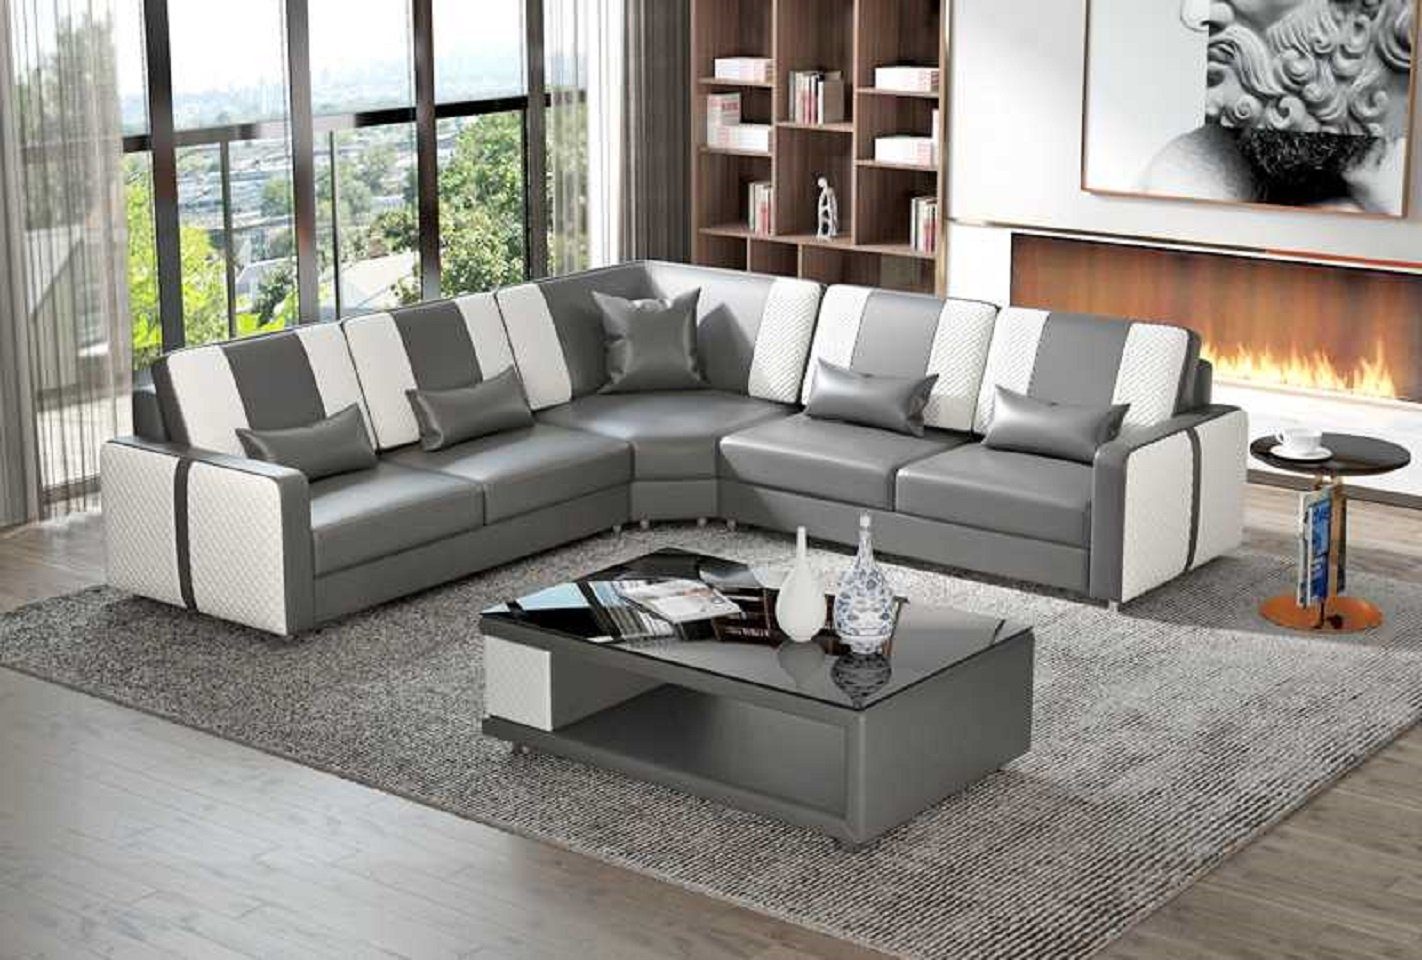 JVmoebel Ecksofa Eckgarnitur Couch Grau Made in 3 Design Sofa Ecksofa L Modern Eckcouch, Europe Teile, Form